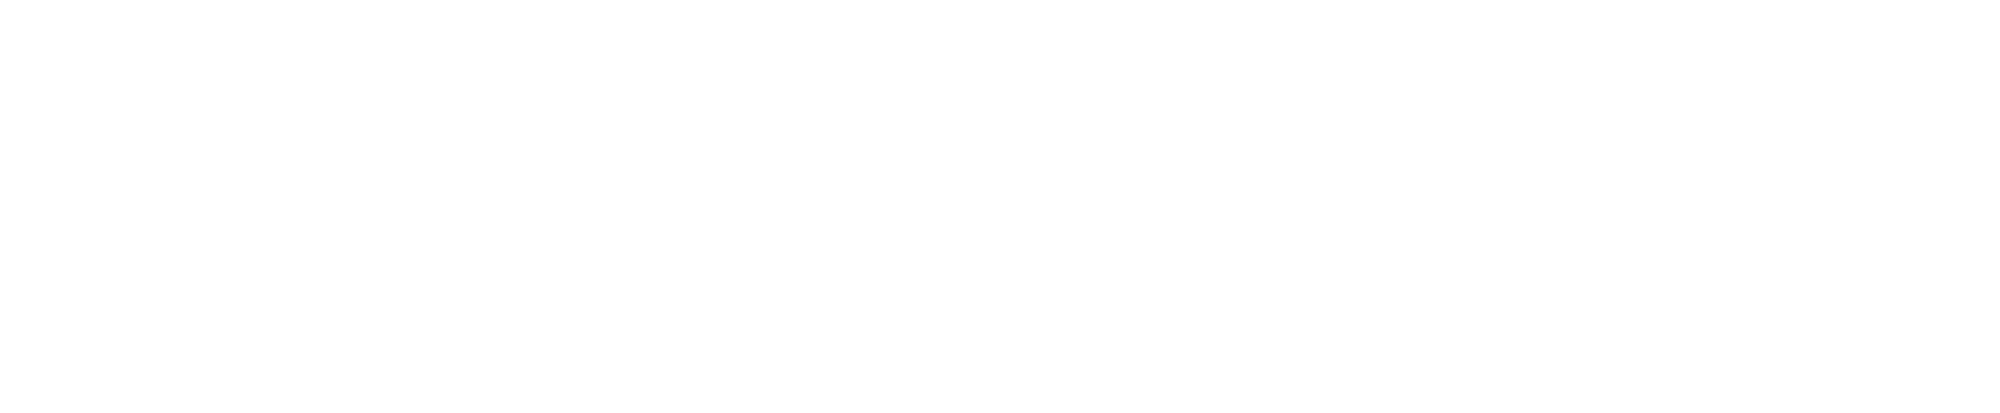 Bluefield University typeface logo in white.